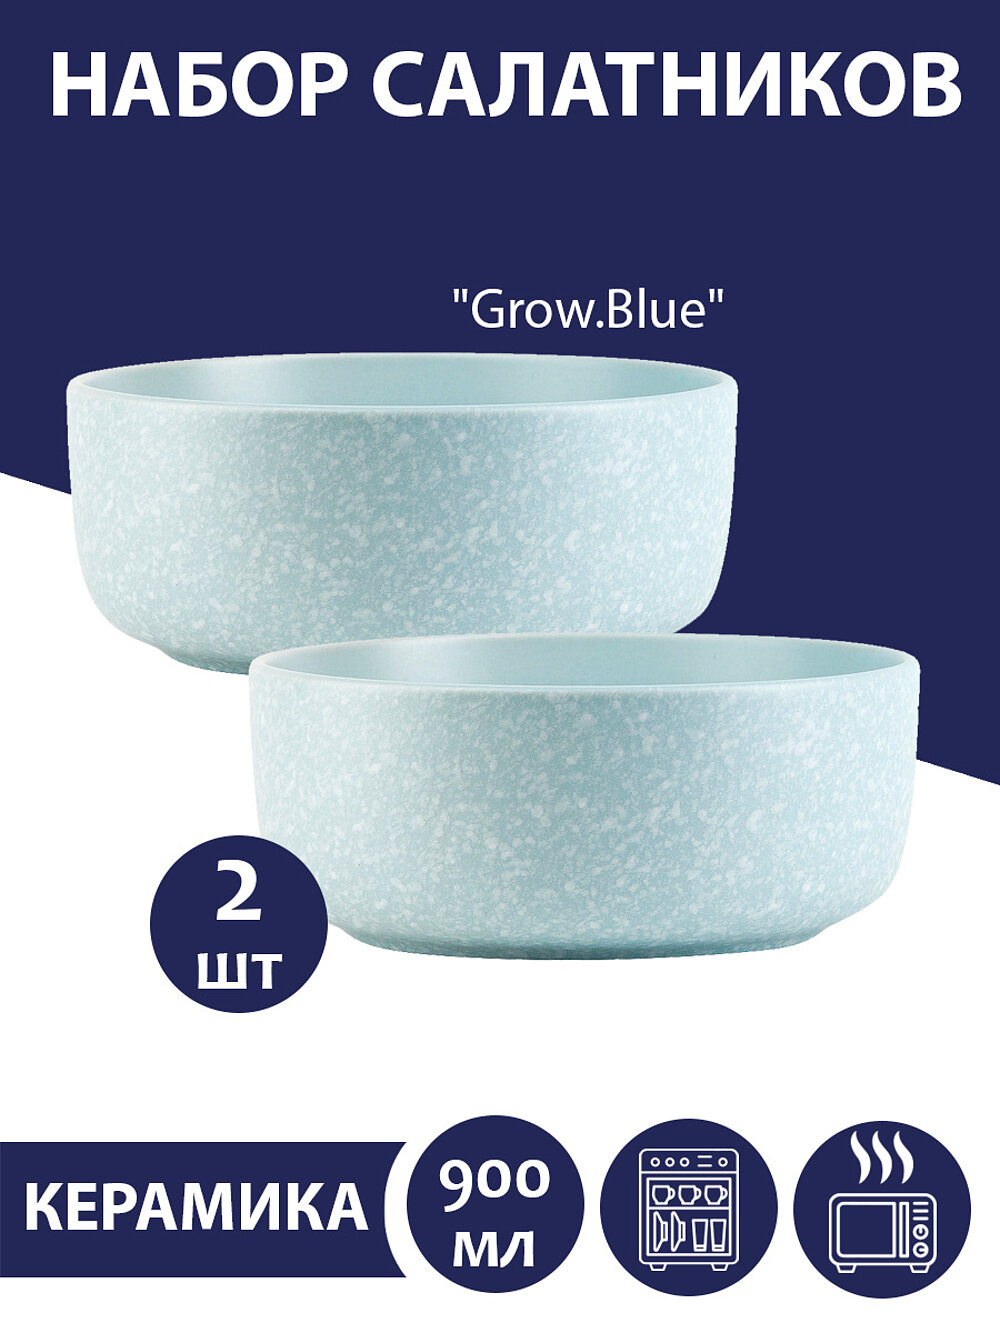 Набор салатников 2 шт "Grow.Blue", 900 мл, Nouvelle